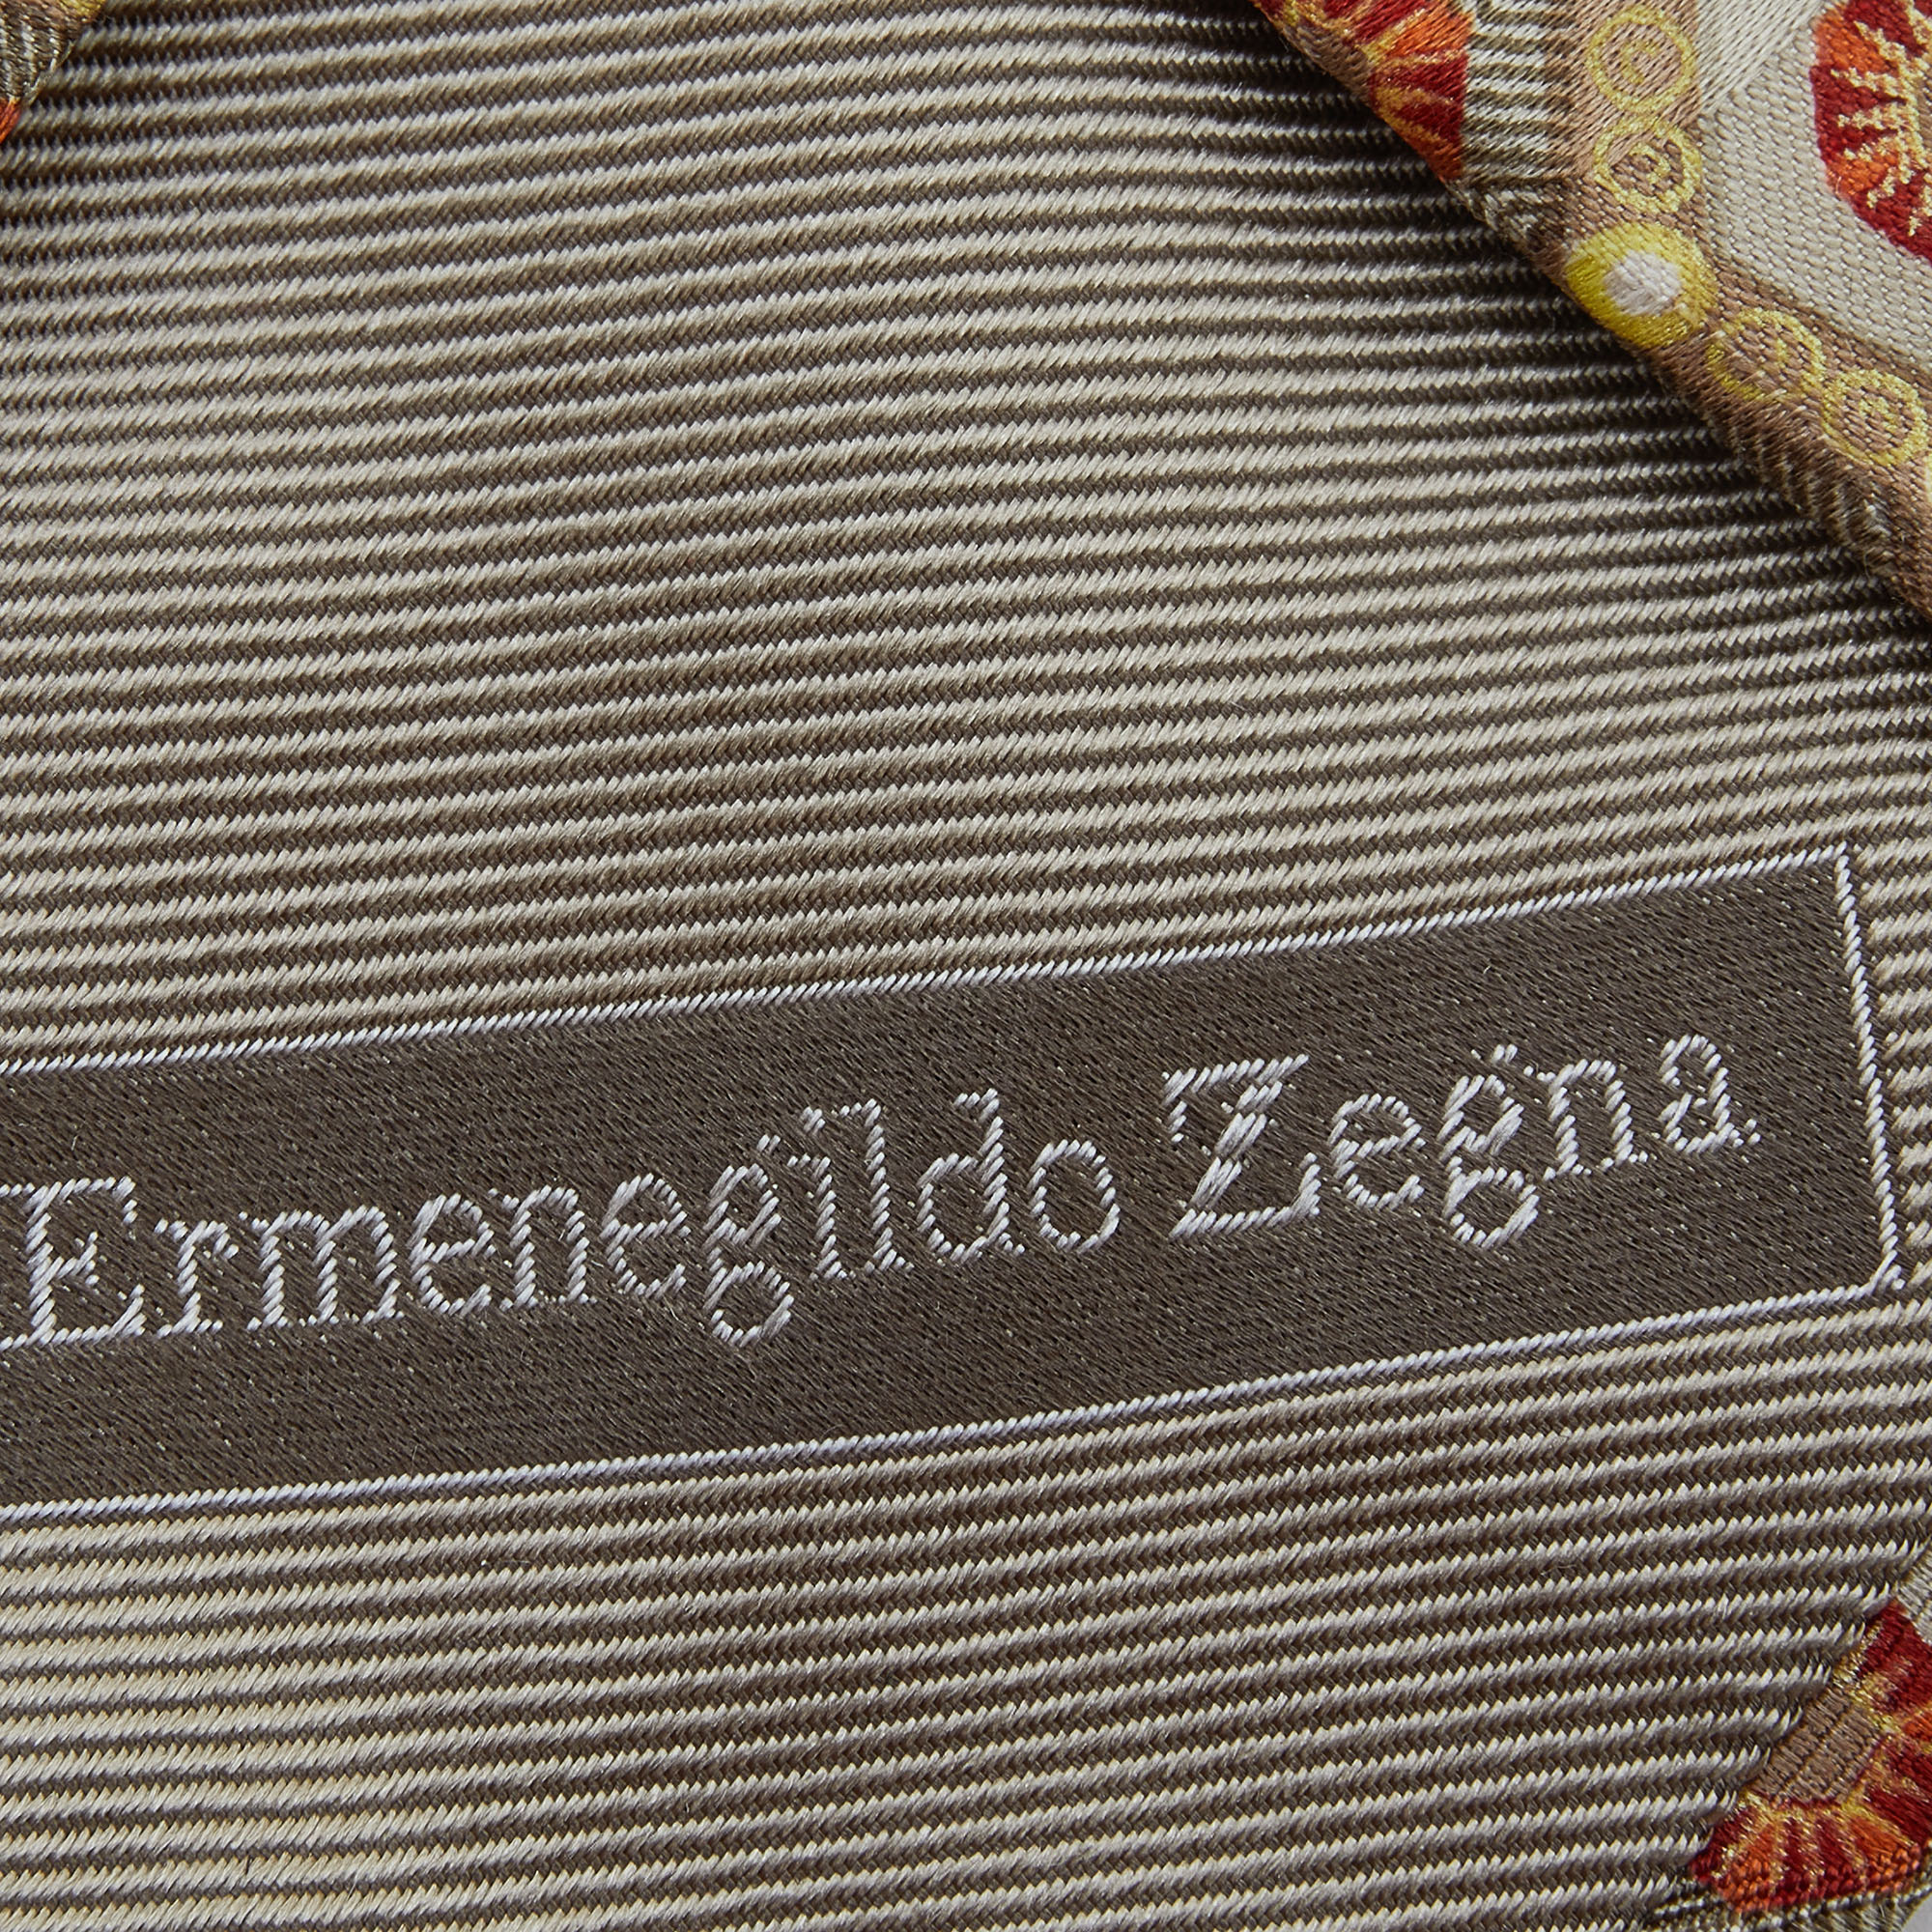 Ermenegildo Zegna Vintage Gold Jacquard Silk Tie